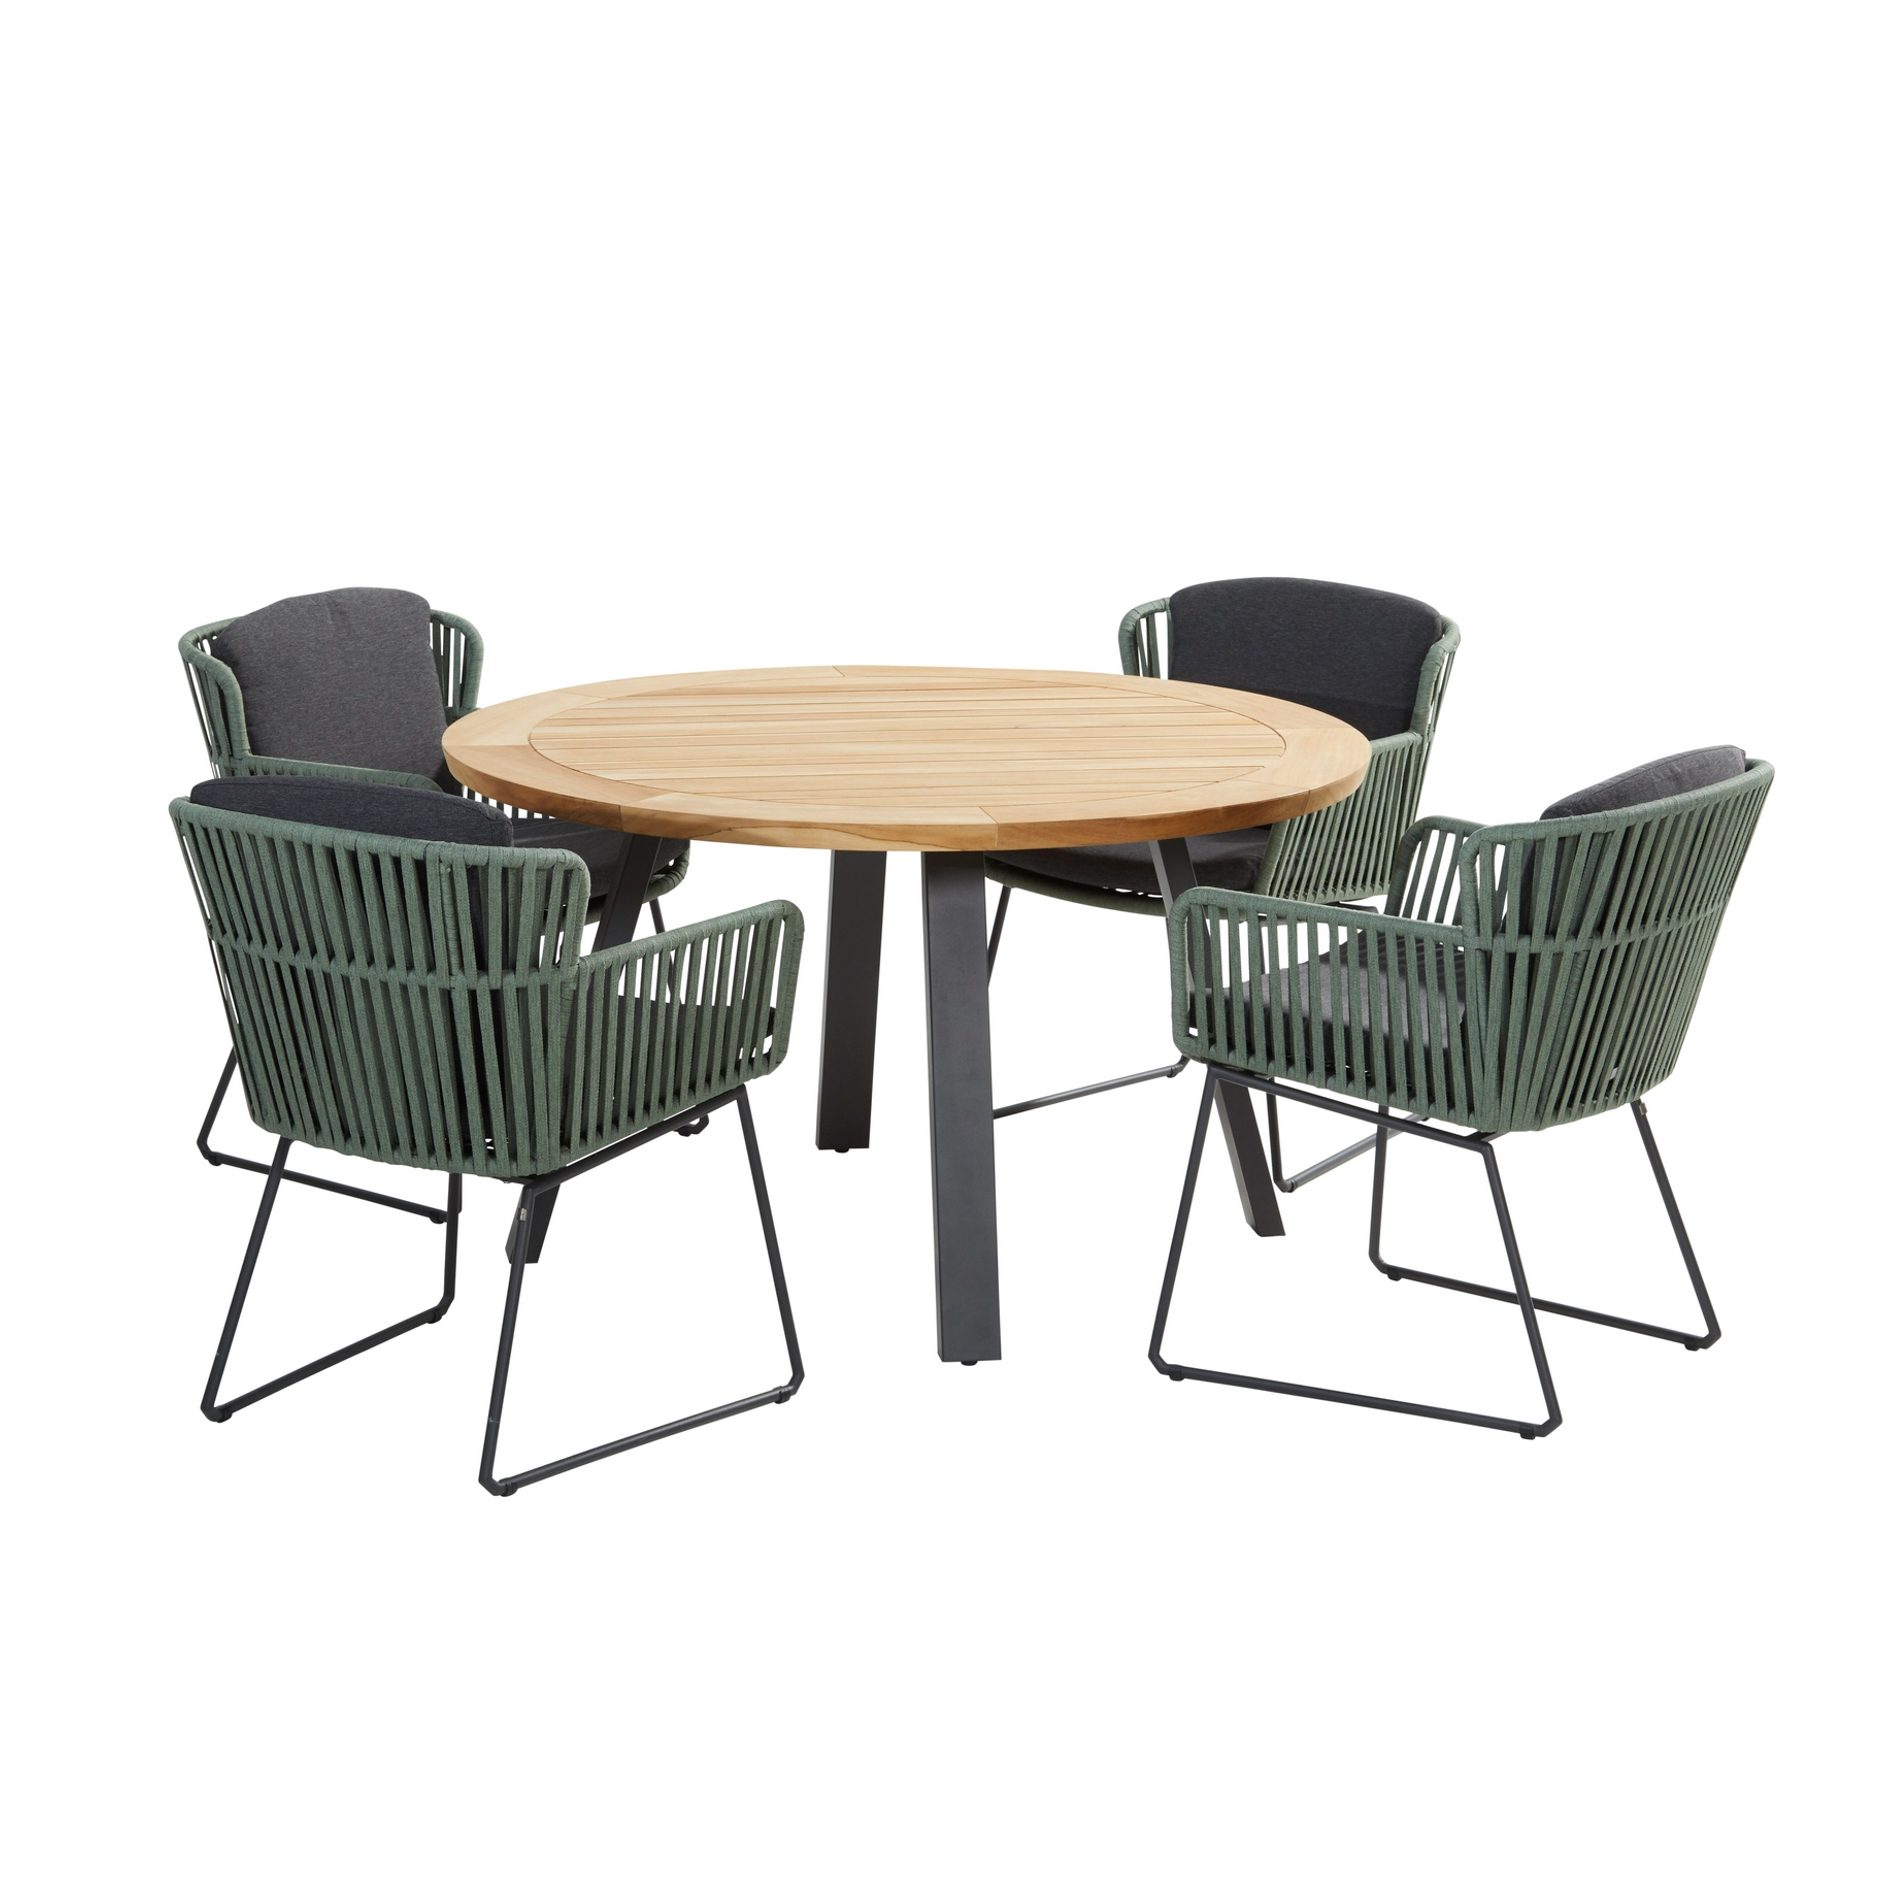 4Seasons Outdoor Gartenmöbel-Set mit Tisch "Ambassador" Ø 130 cm und Diningsessel "Vitali", Rope grün